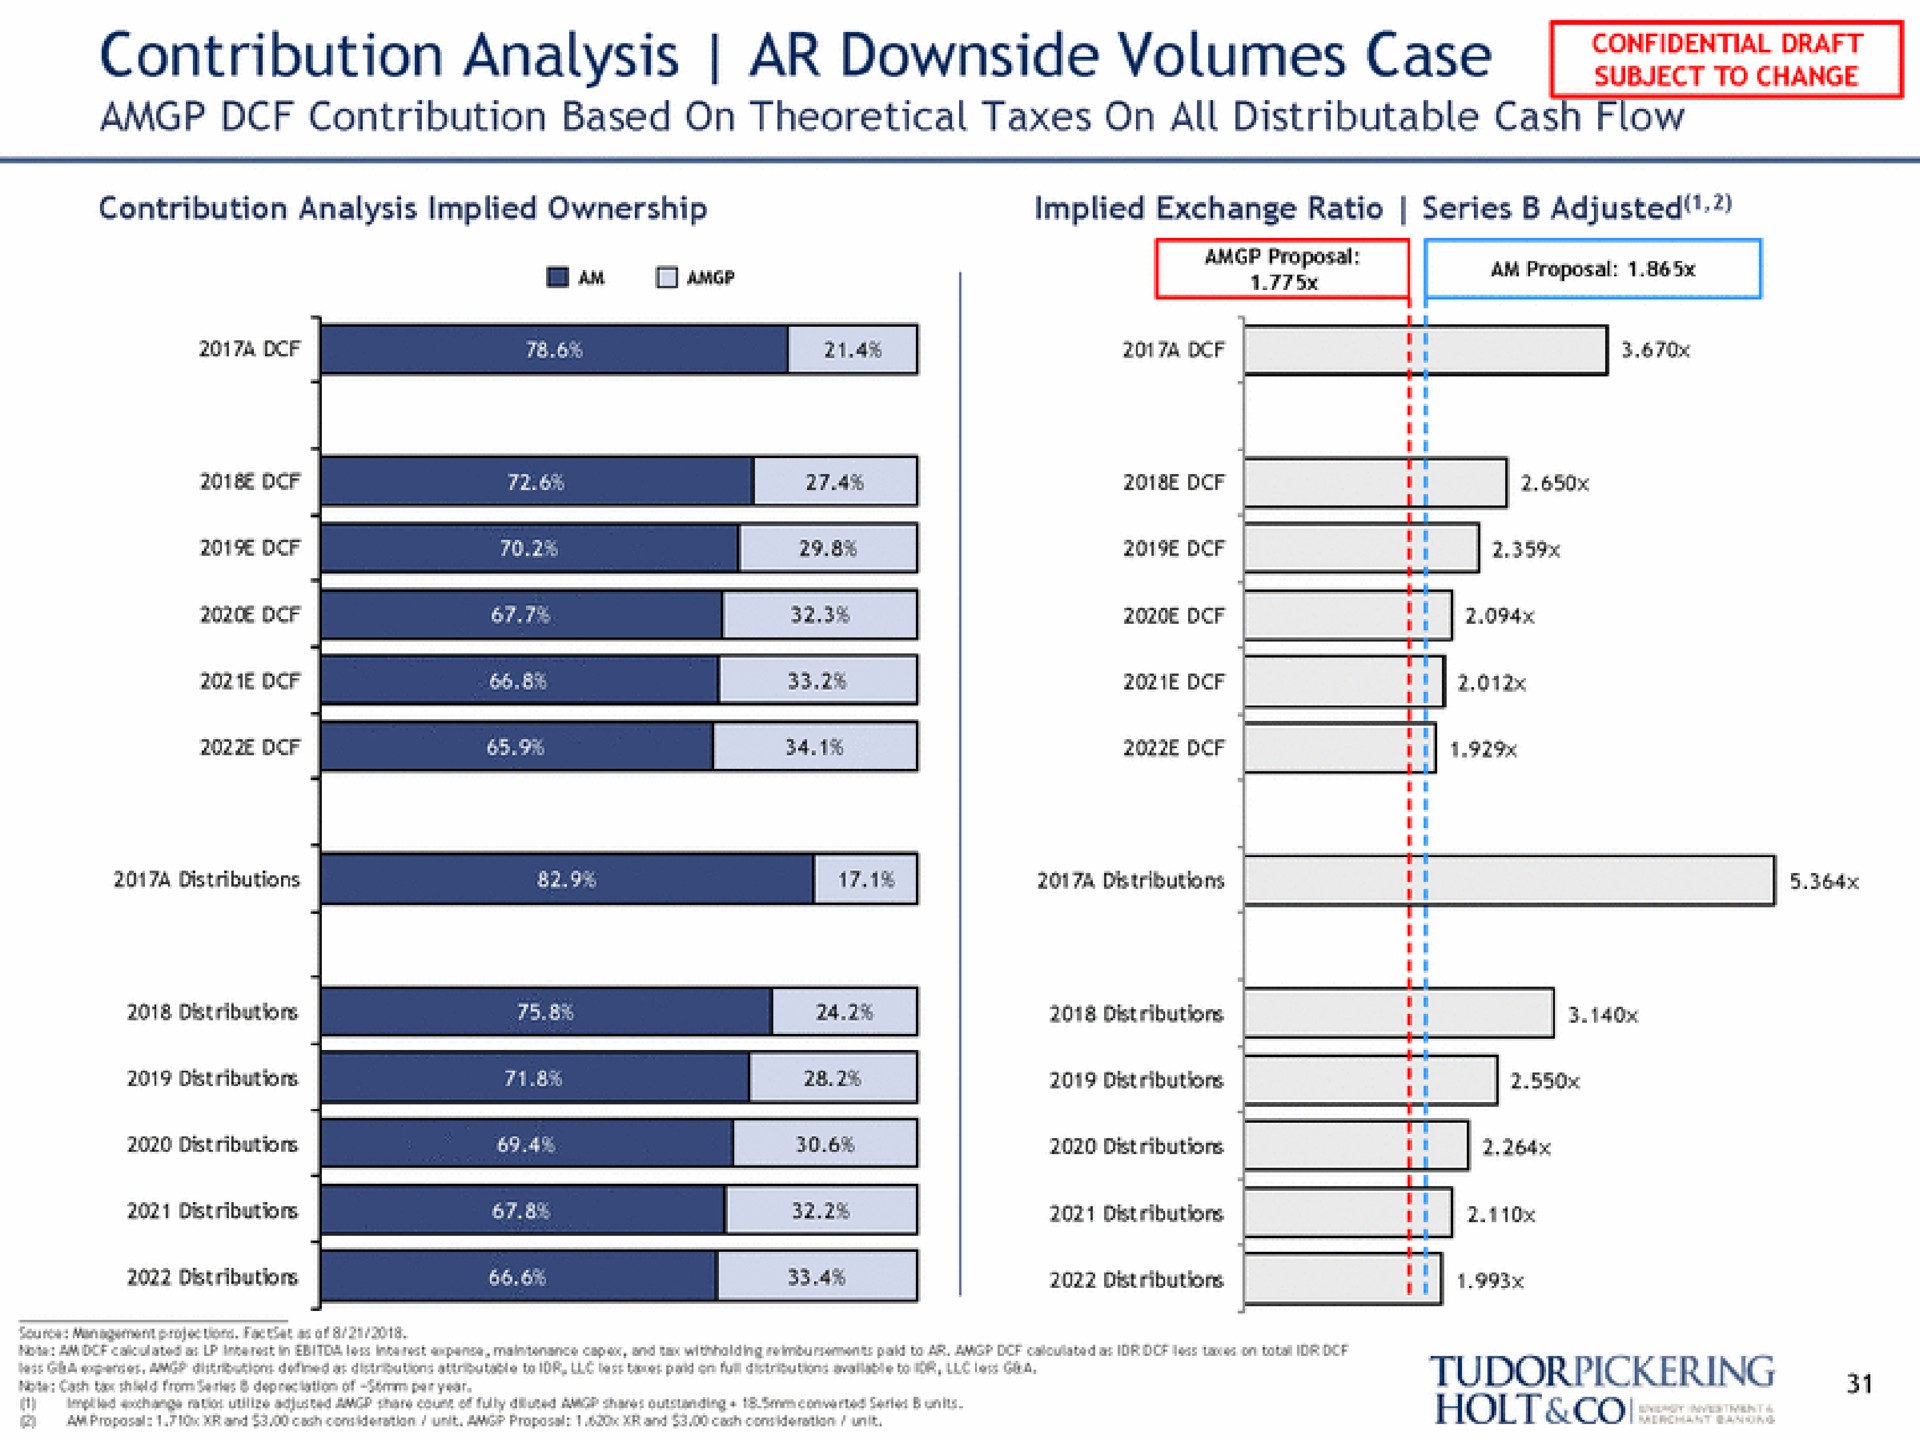 contribution analysis downside volumes case soma oer | Tudor, Pickering, Holt & Co